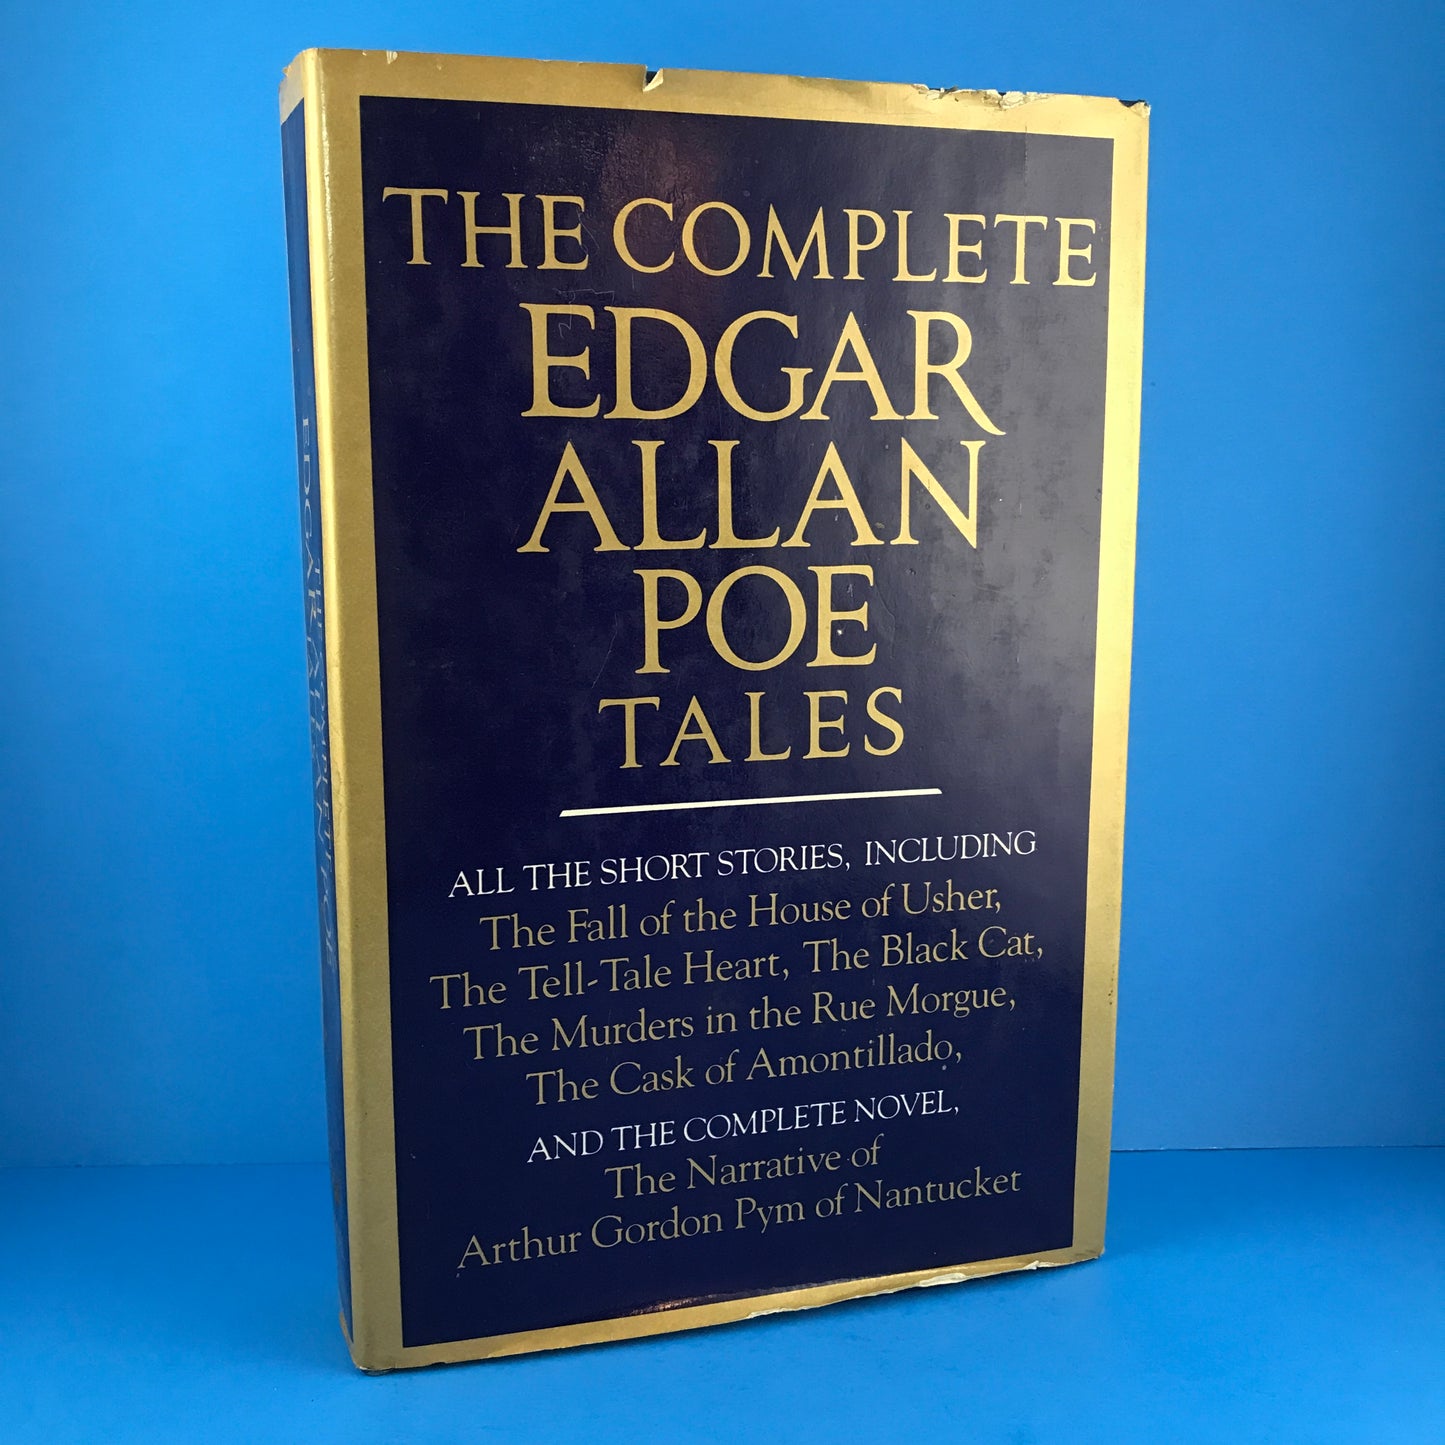 The Complete Edgar Allan Poe Tales